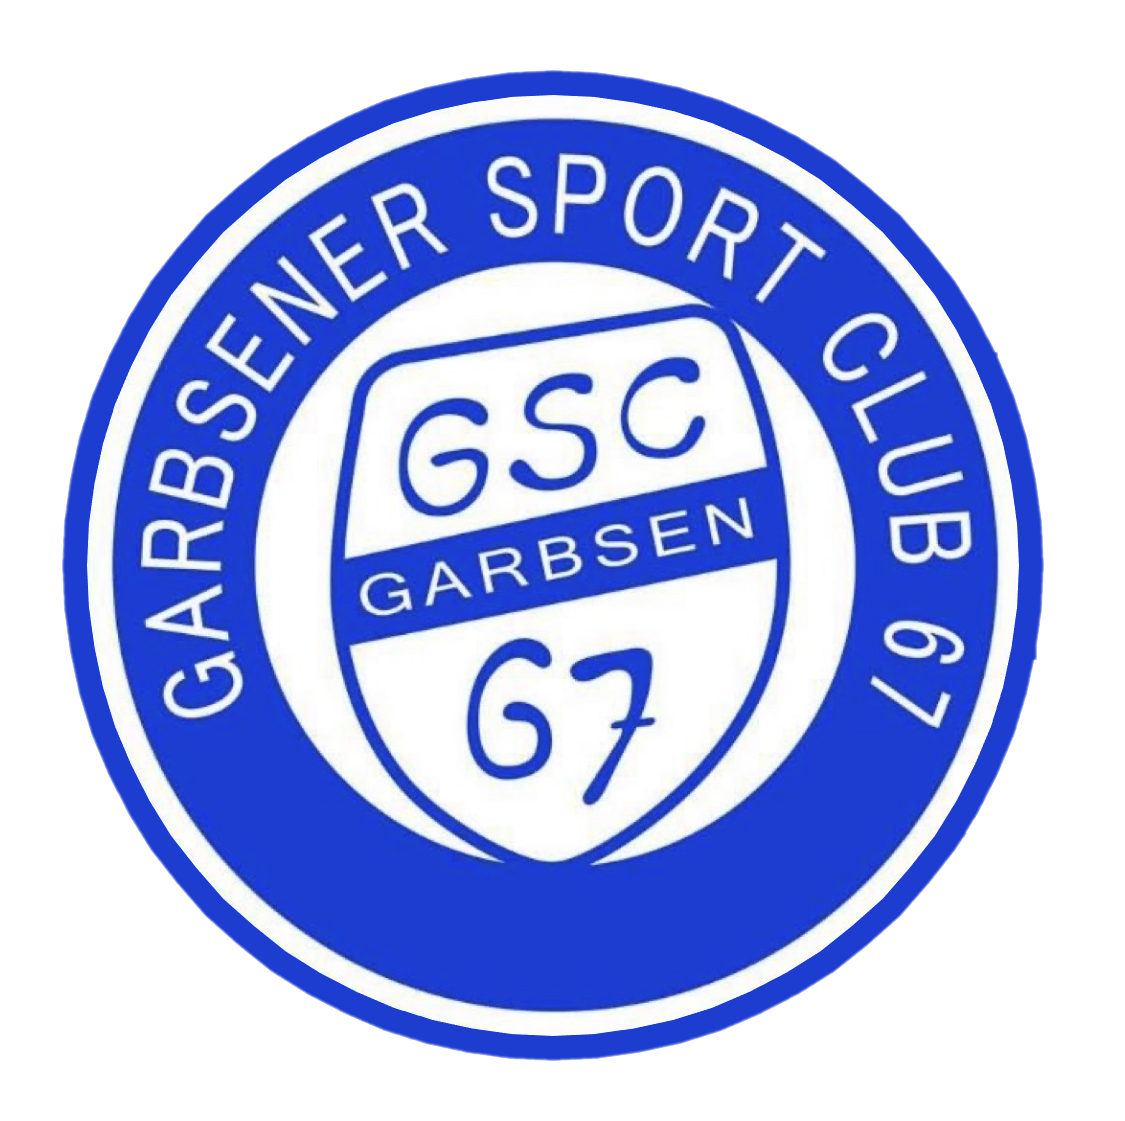 Garbsener Sport-Club 67 e.V.